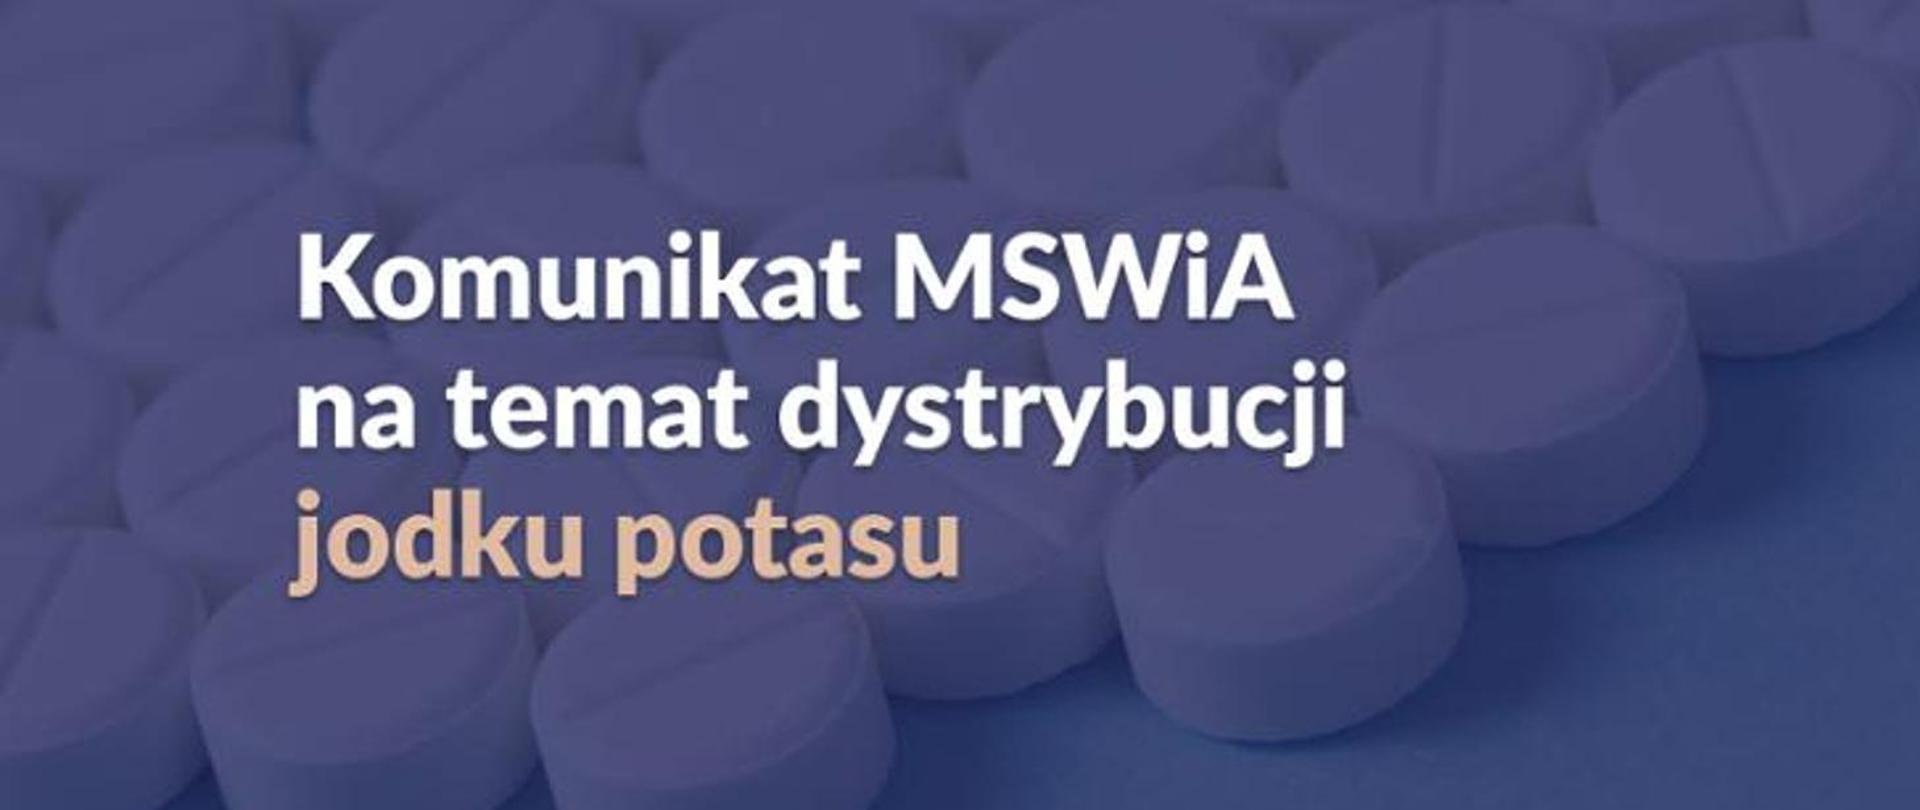 Komunikat MSWiA na temat dystrybucji jodku potasu